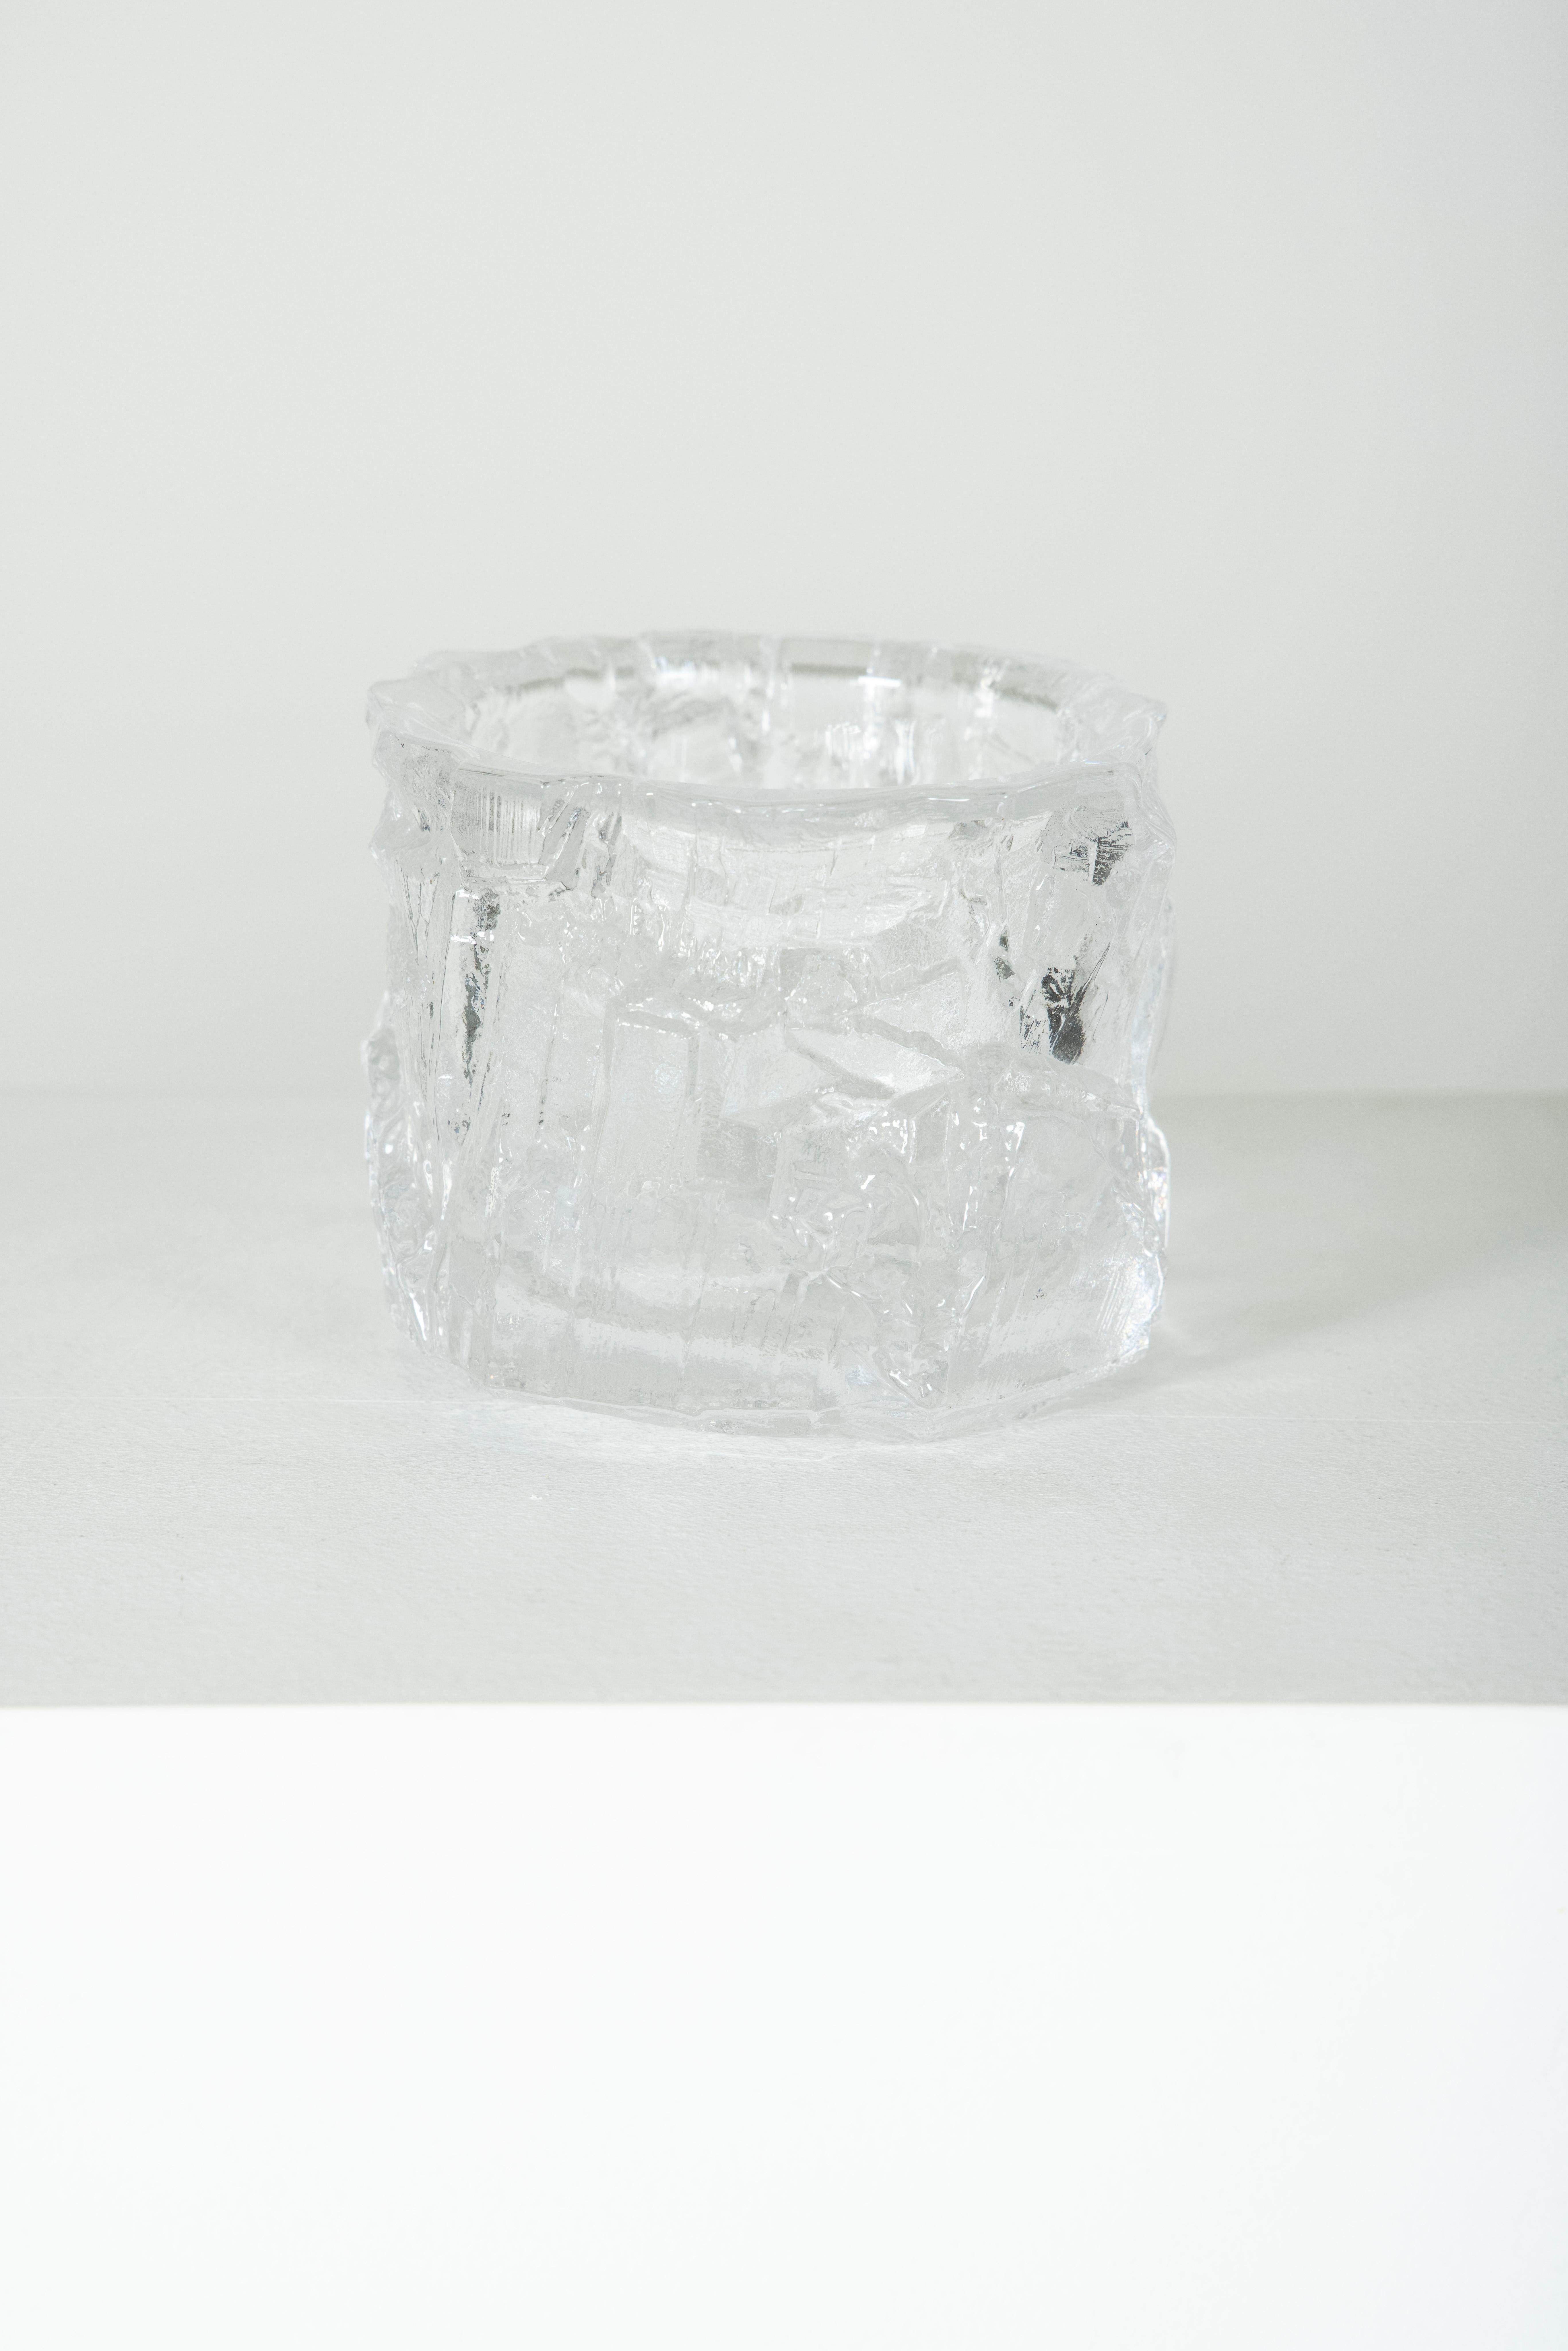 Mid-Century Modern Ice Crystals Effect Trinket Bowl in Daum's Crystal, France